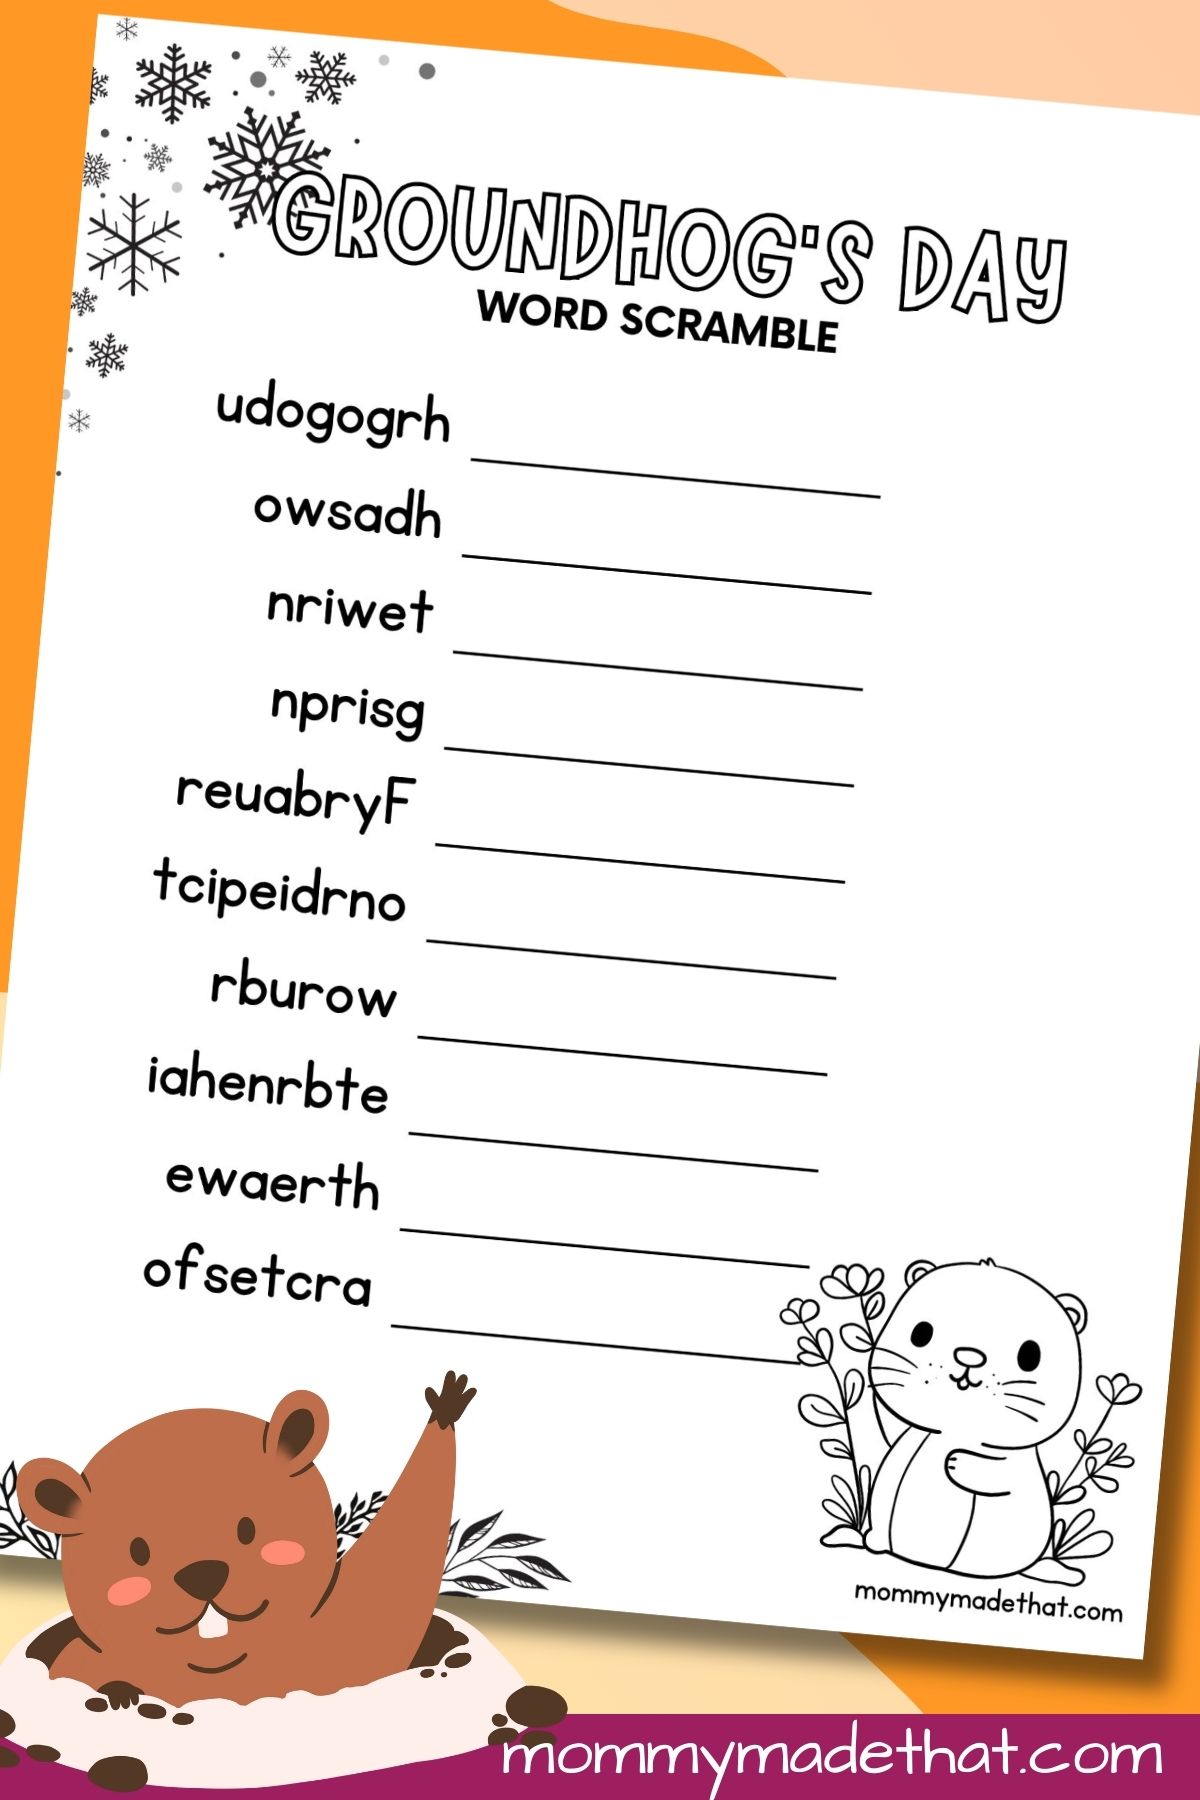 Free Groundhog's day word scramble printable.